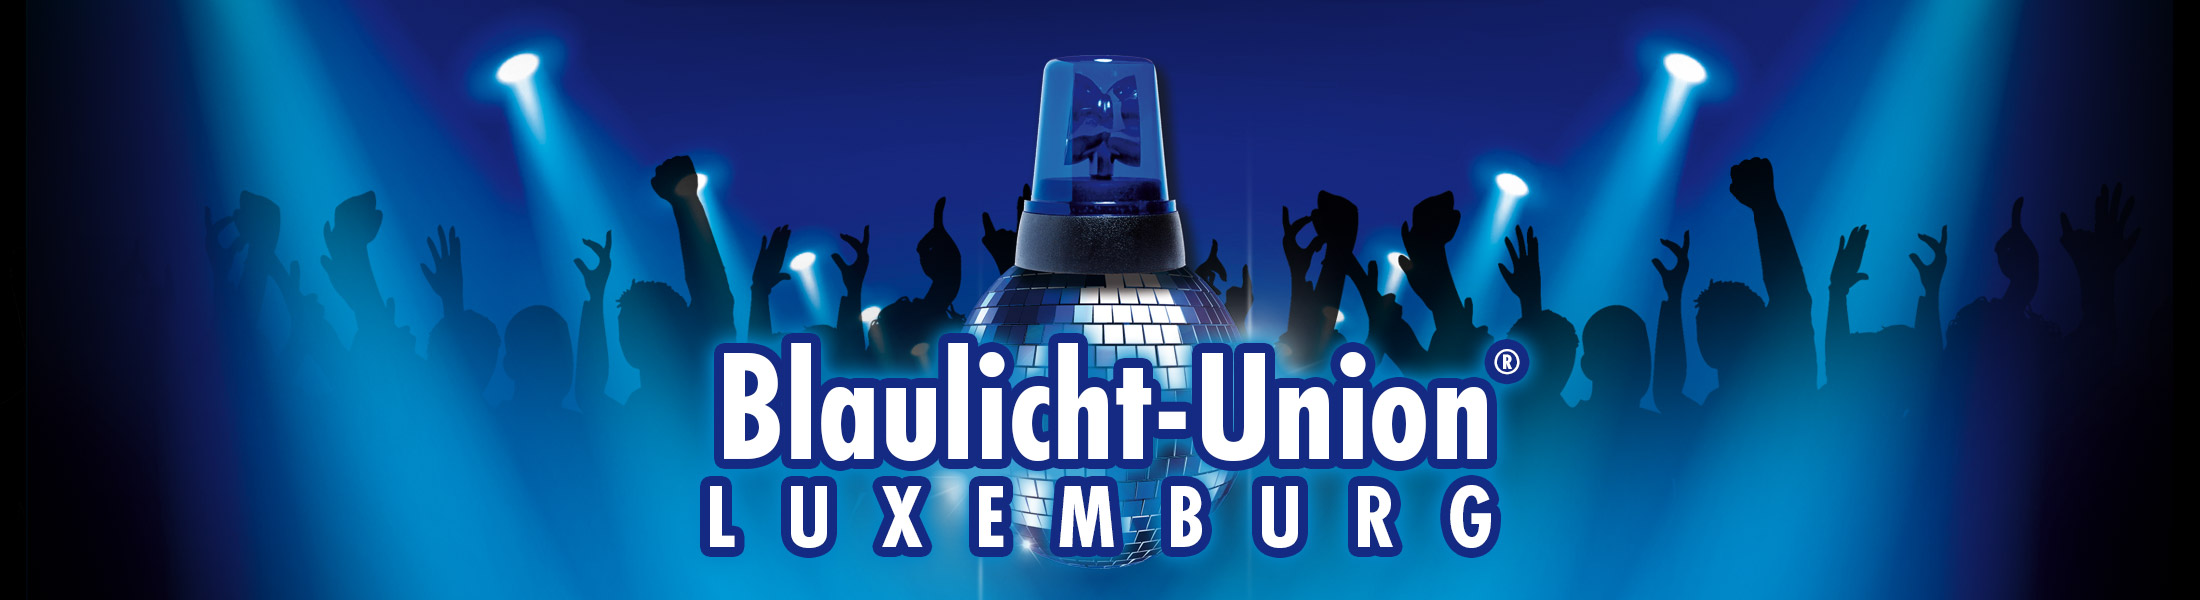 Blaulicht Union Party® Luxemburg